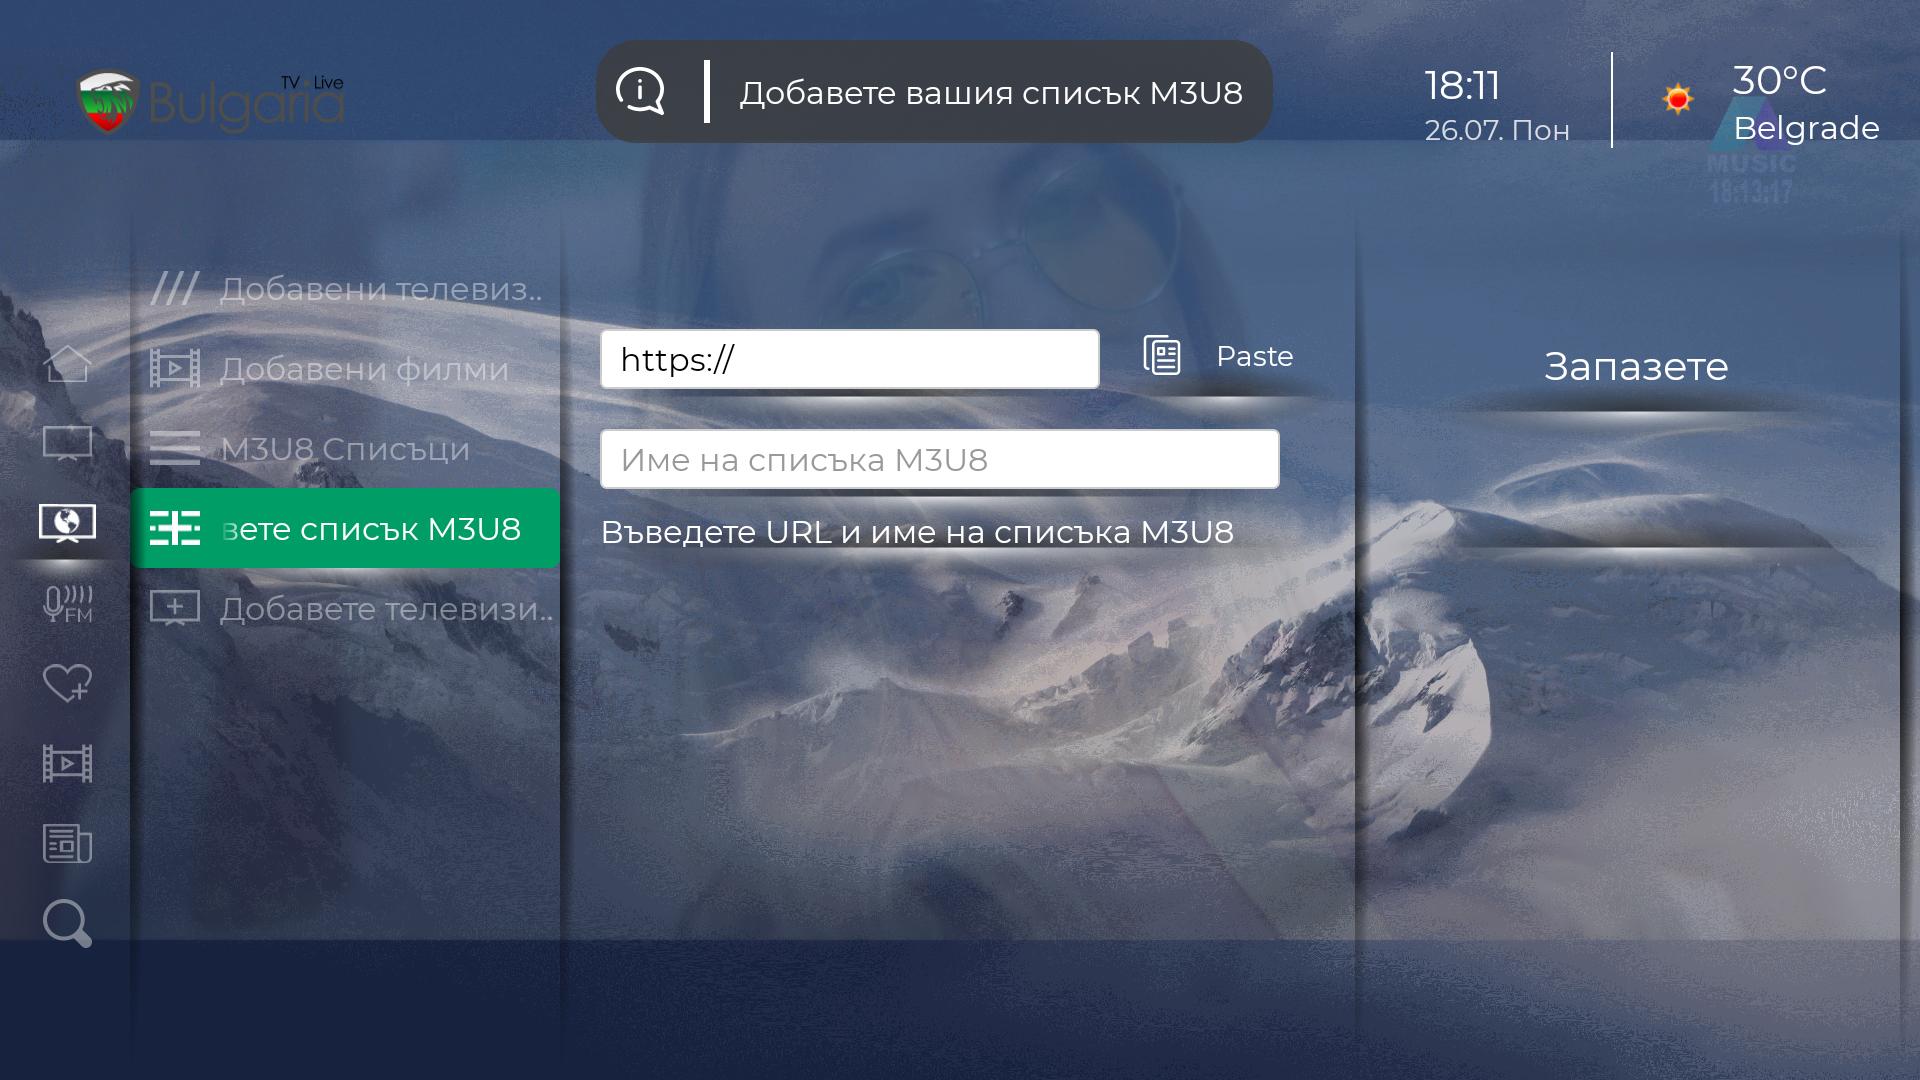 Bulgaria Live 1.2.04 Screenshot 21